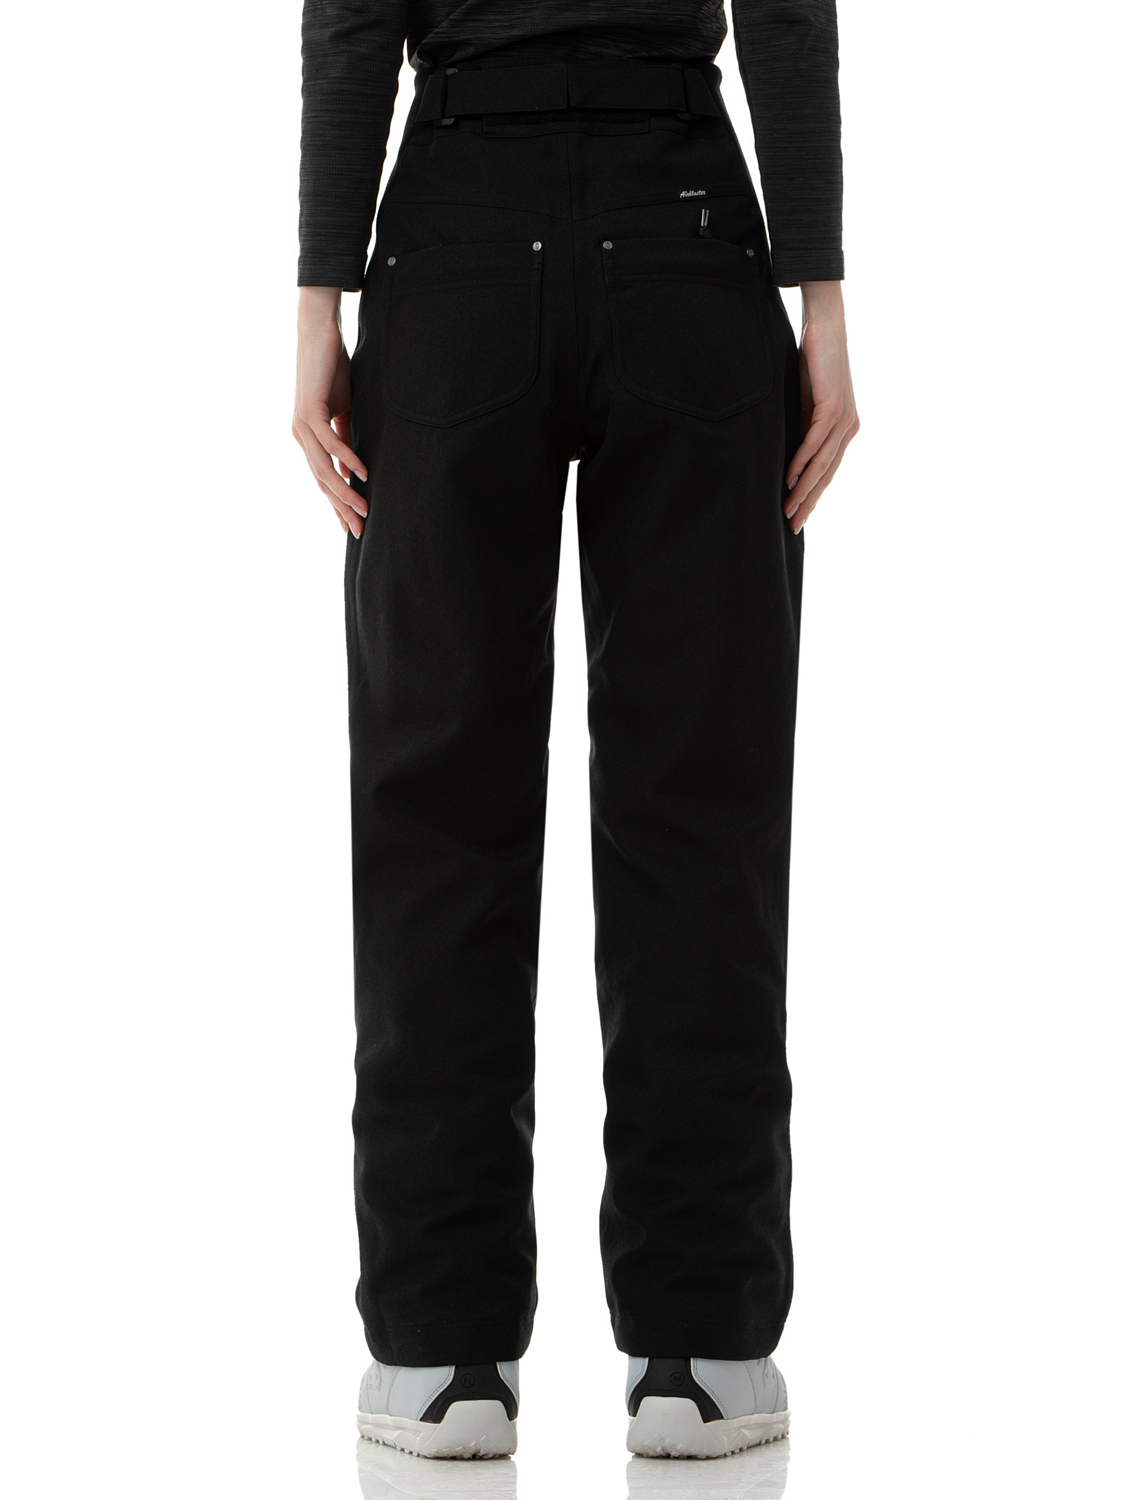 Брюки сноубордические AIRBLASTER High Waisted Trouser Insulated Black –  купить по цене 25550 руб, магазин «Кант»